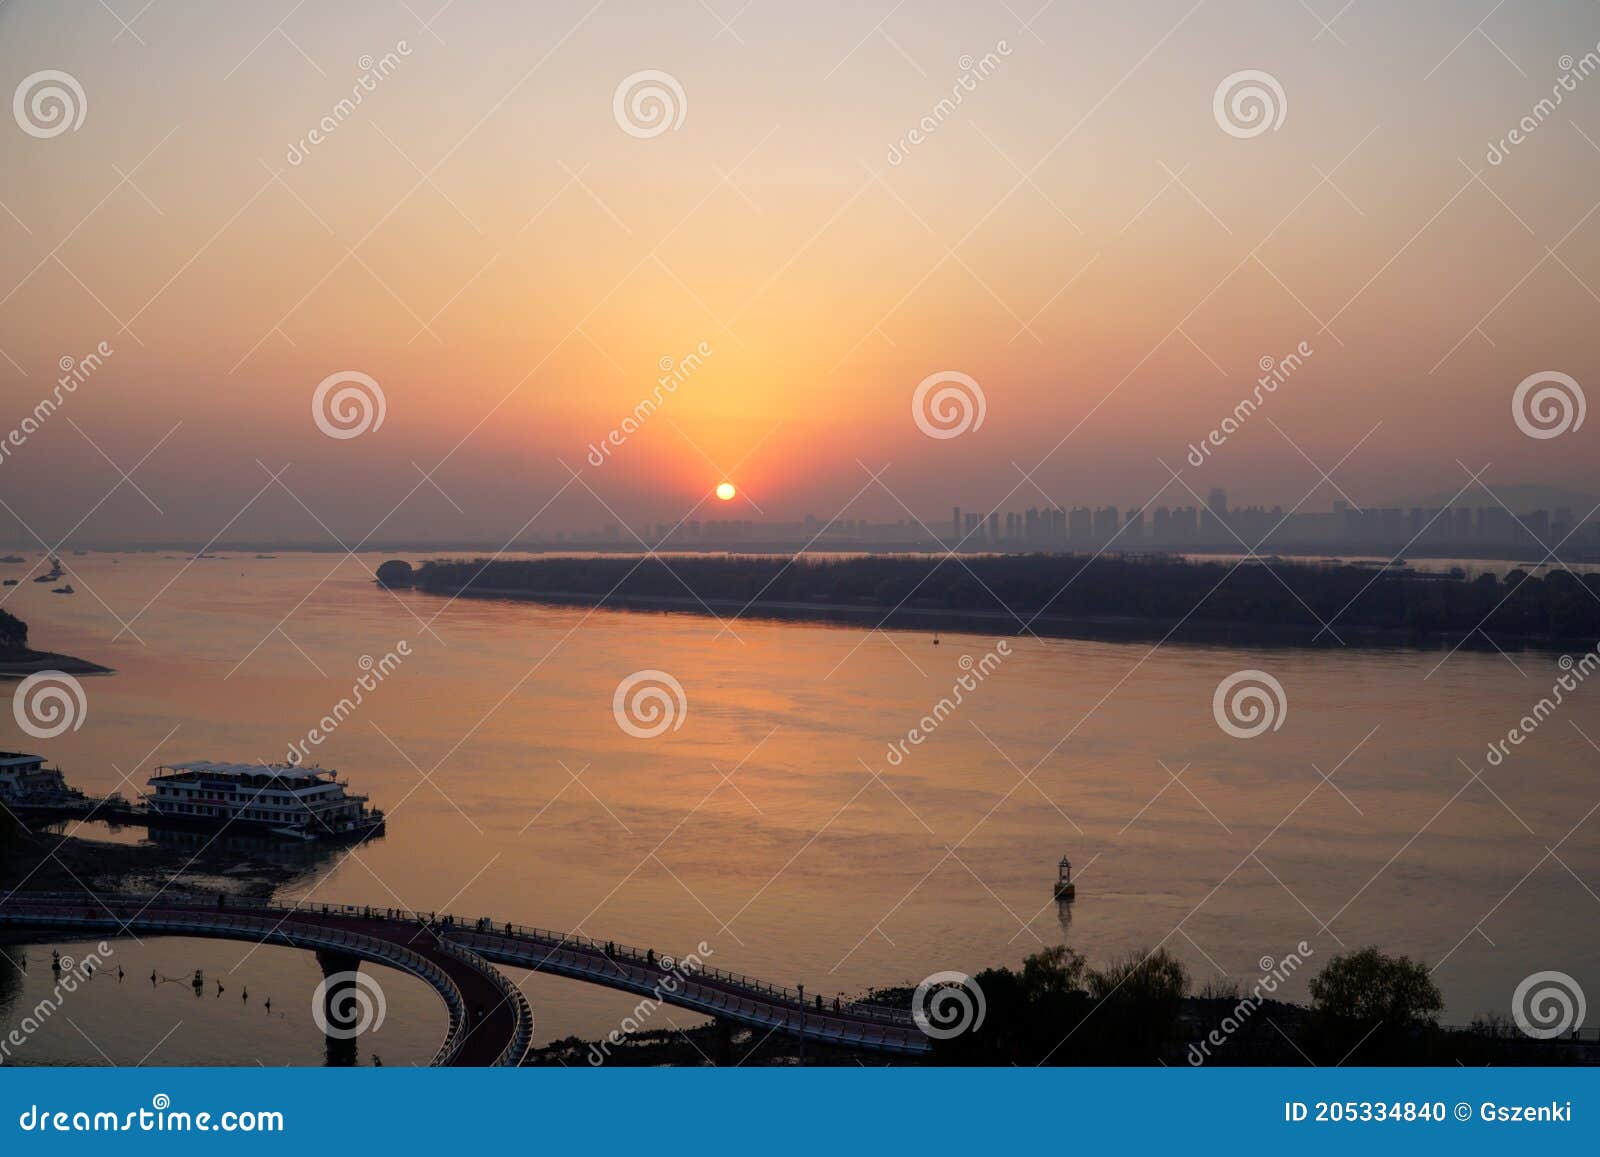 sunset of changjiang river side, nanjing city, china.